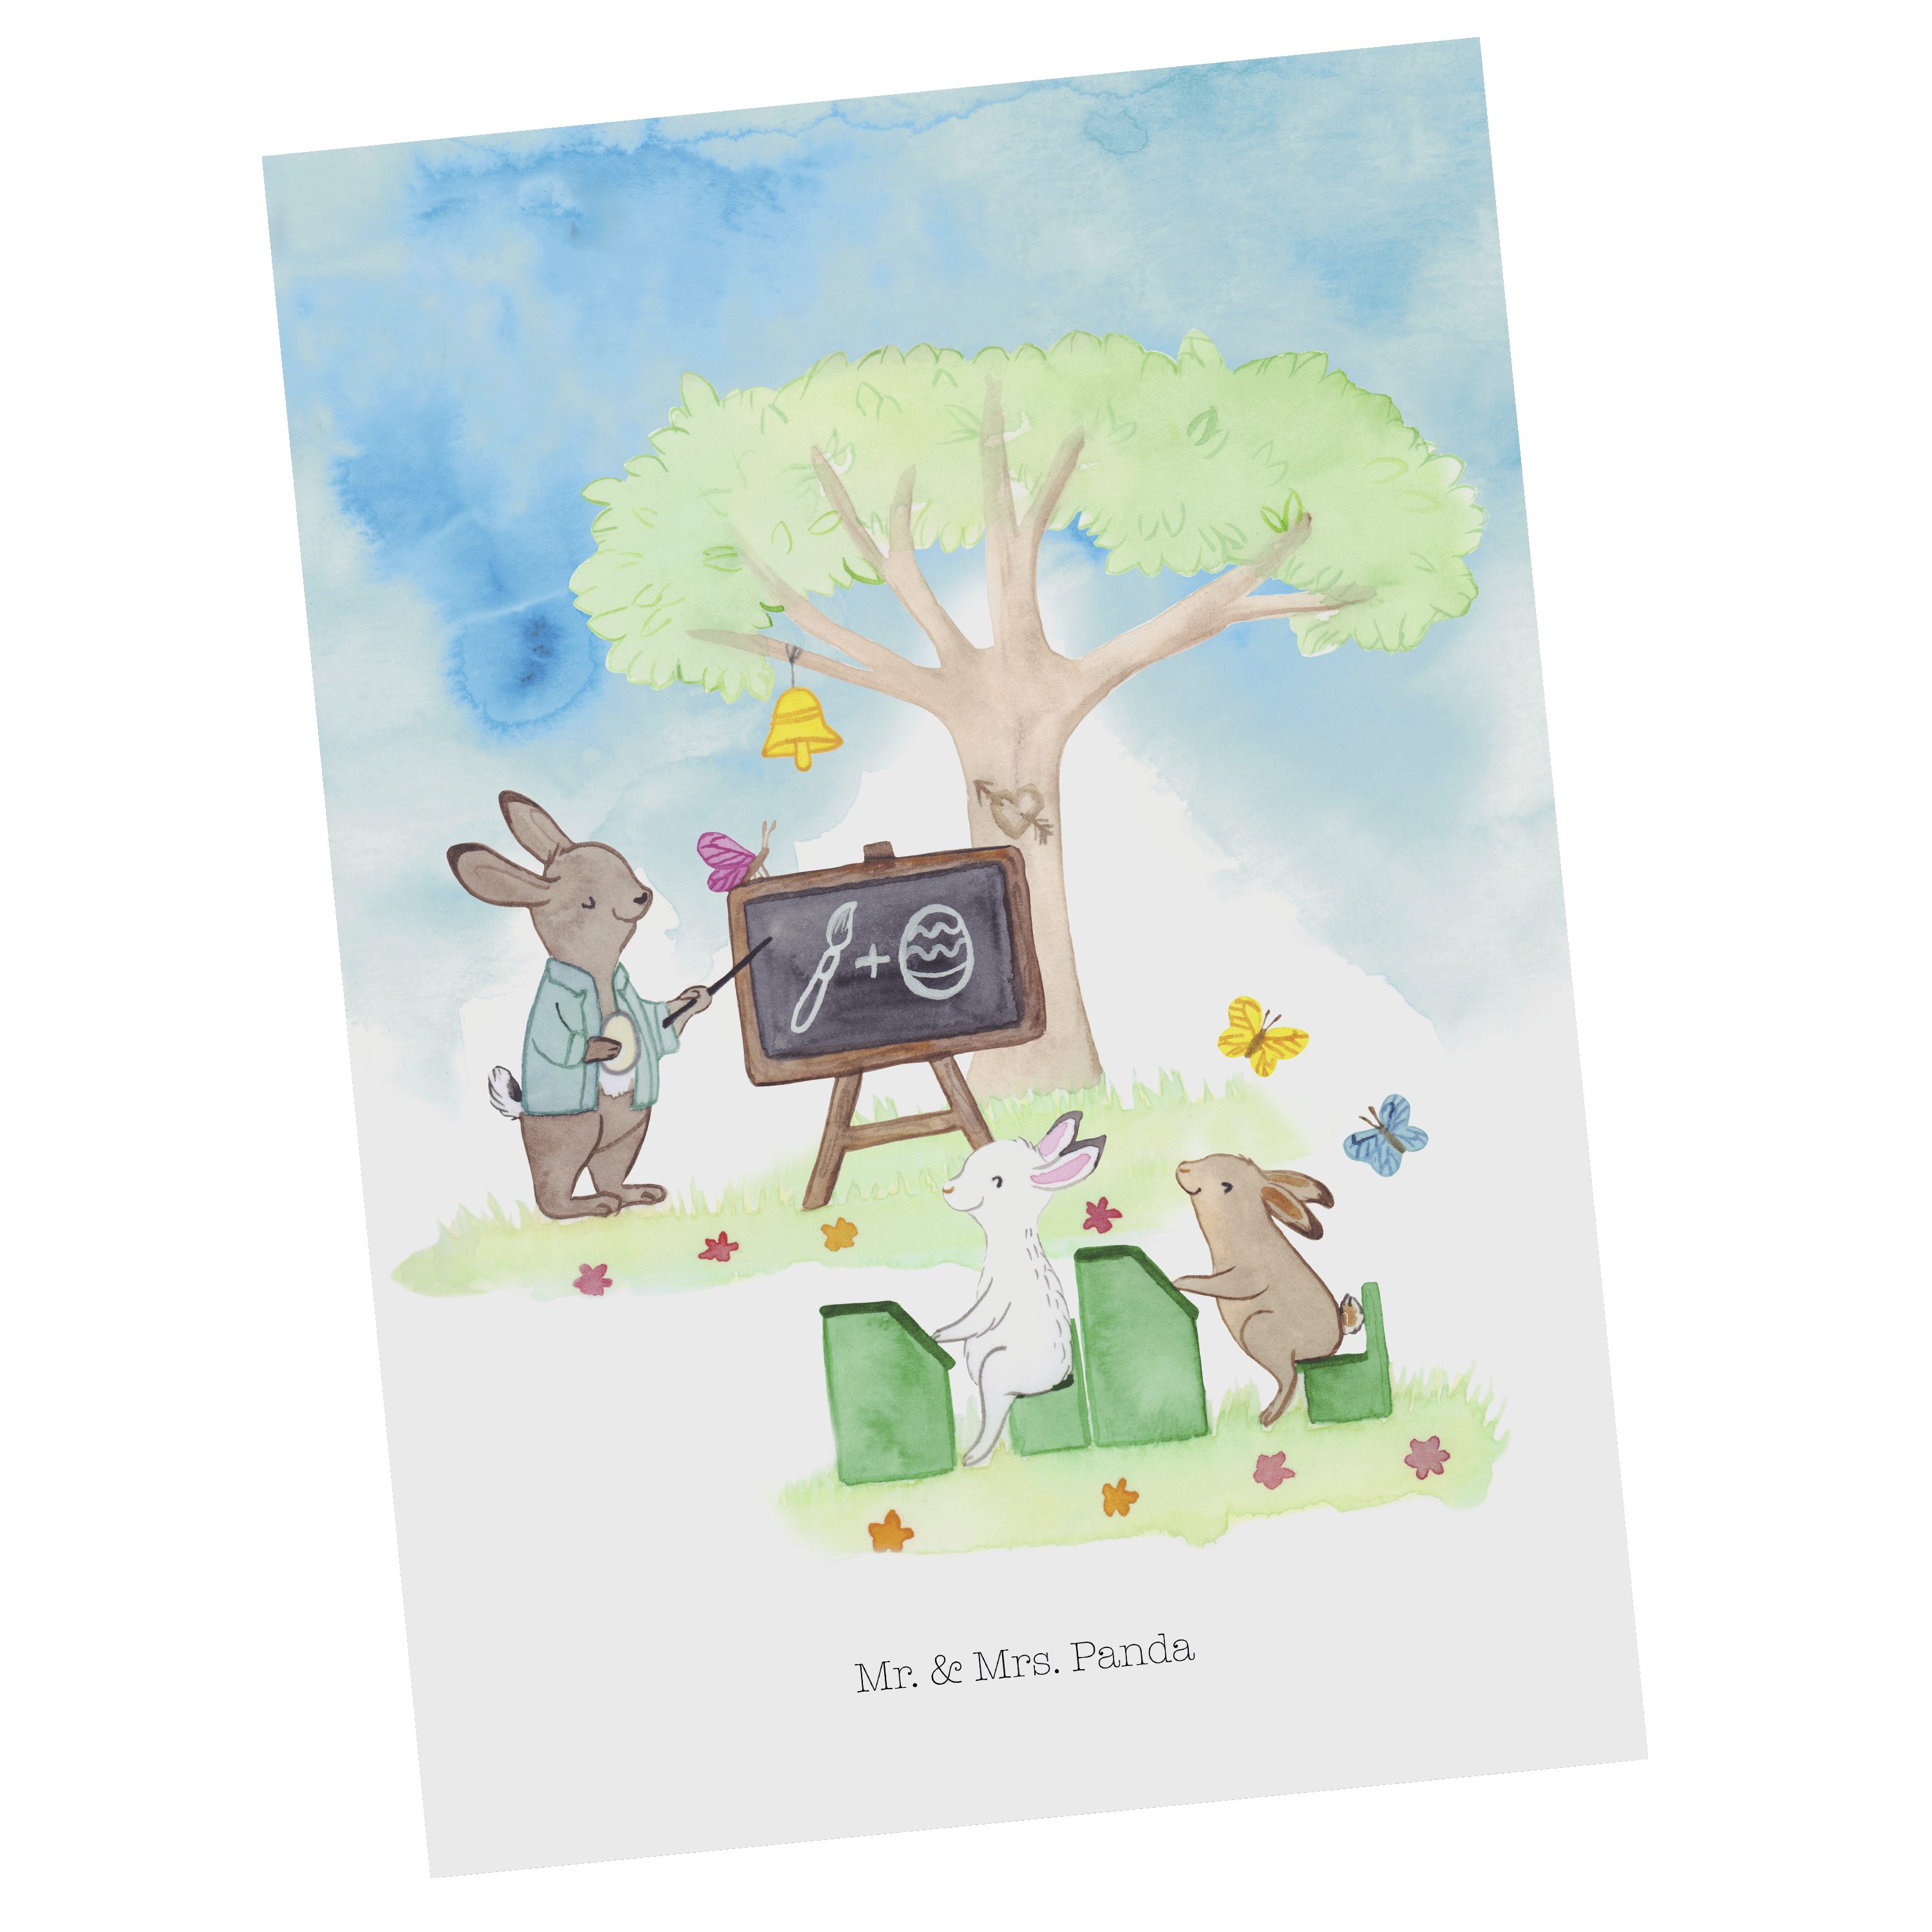 [Beliebte Produkte] Mr. & Mrs. Panda - Geburtstagskarte, Gesc Postkarte - Osterdeko, Geschenk, Osterhasenschule Weiß